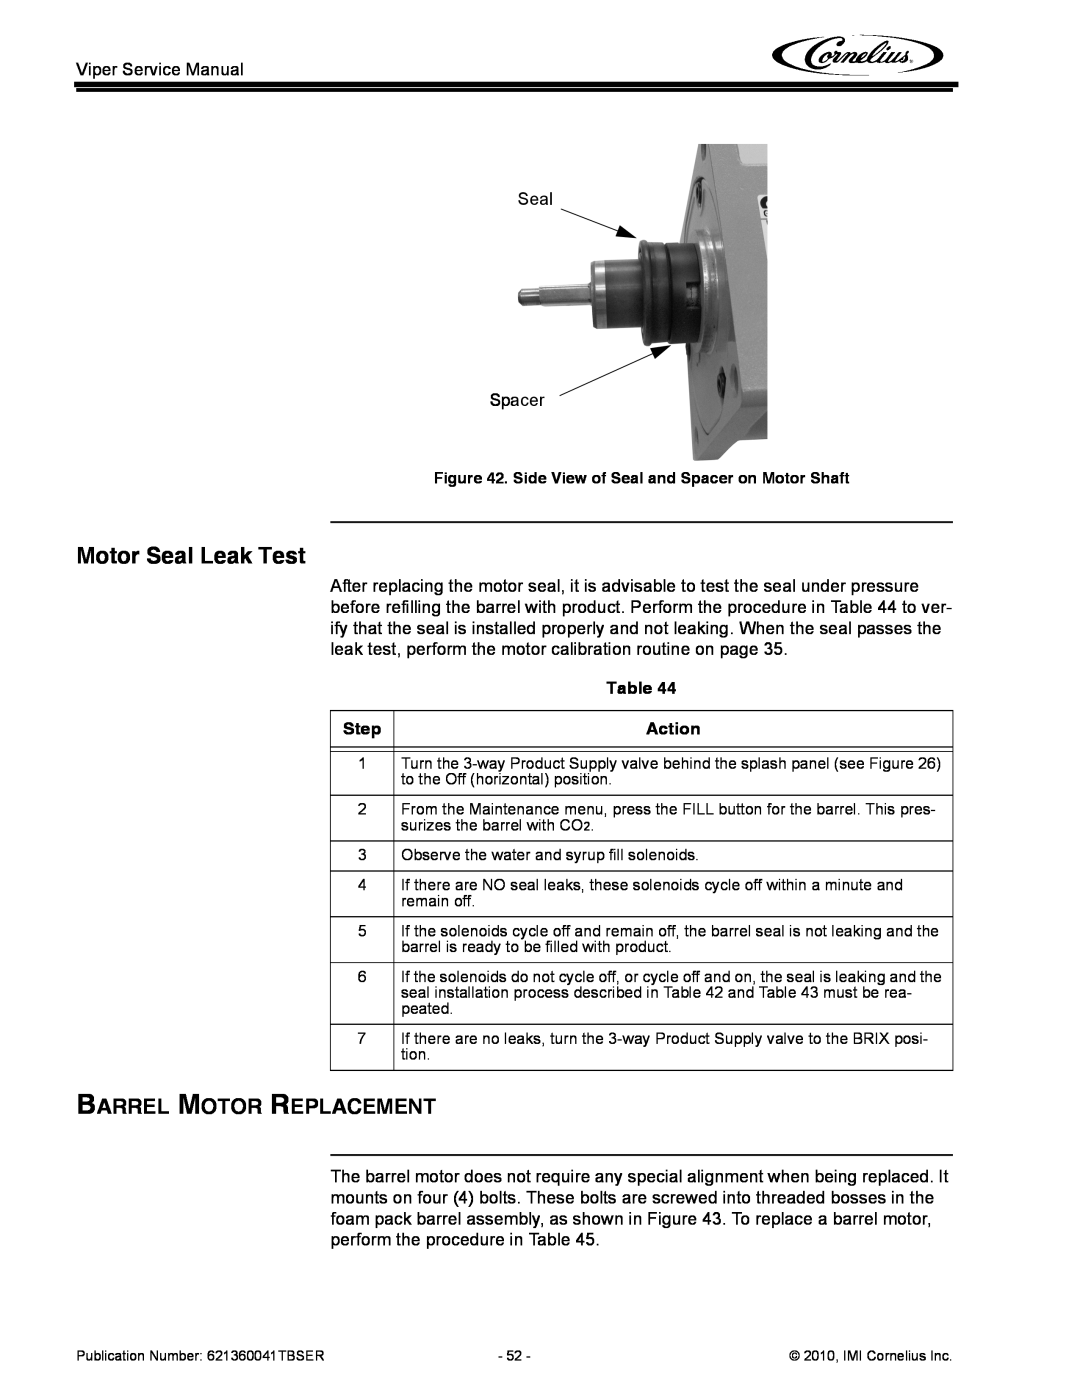 Cornelius 3 service manual Motor Seal Leak Test, Barrel Motor Replacement, Step, Action 